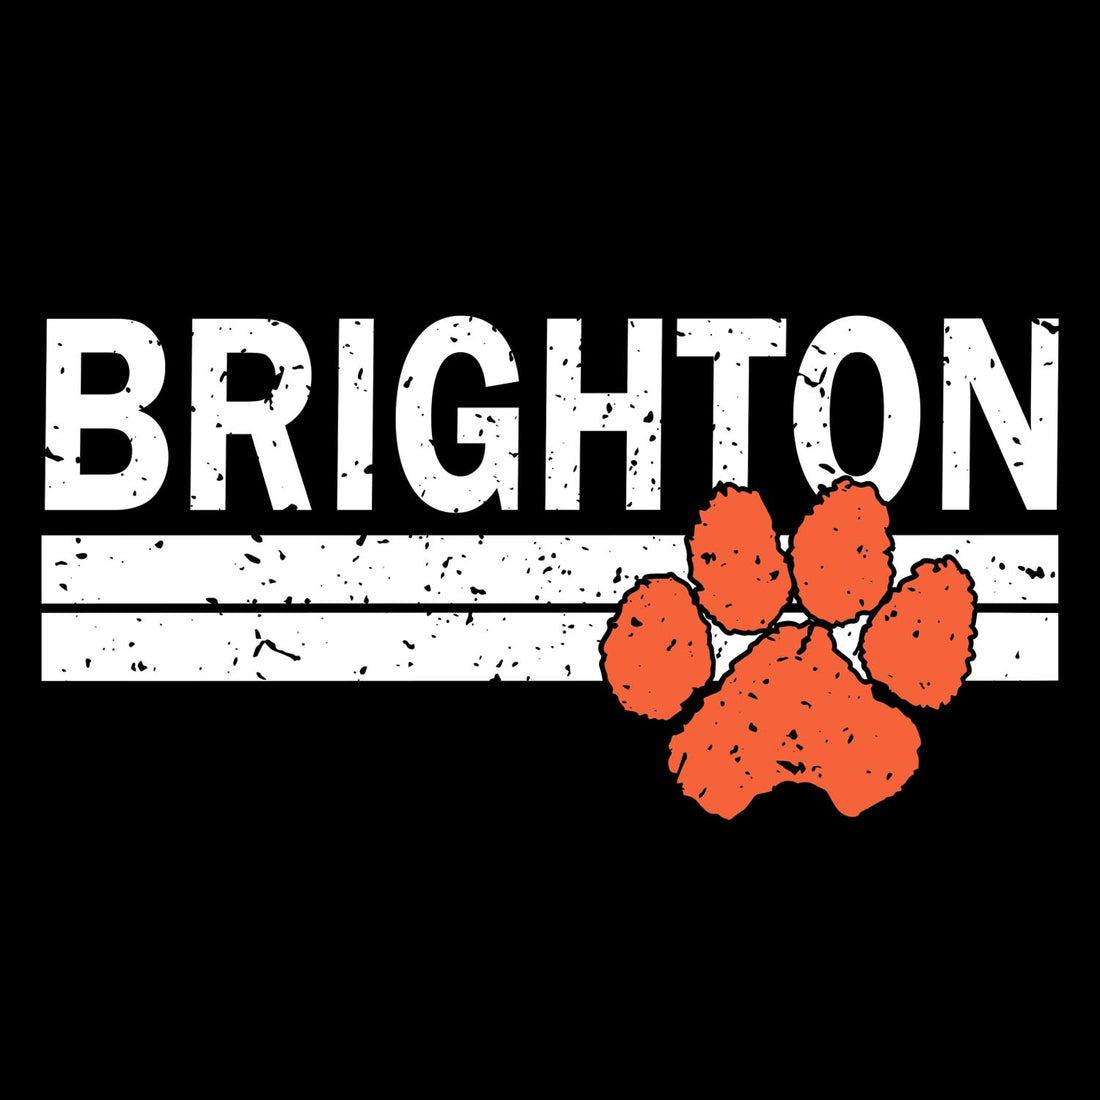 Brighton Bulldogs B147 Black